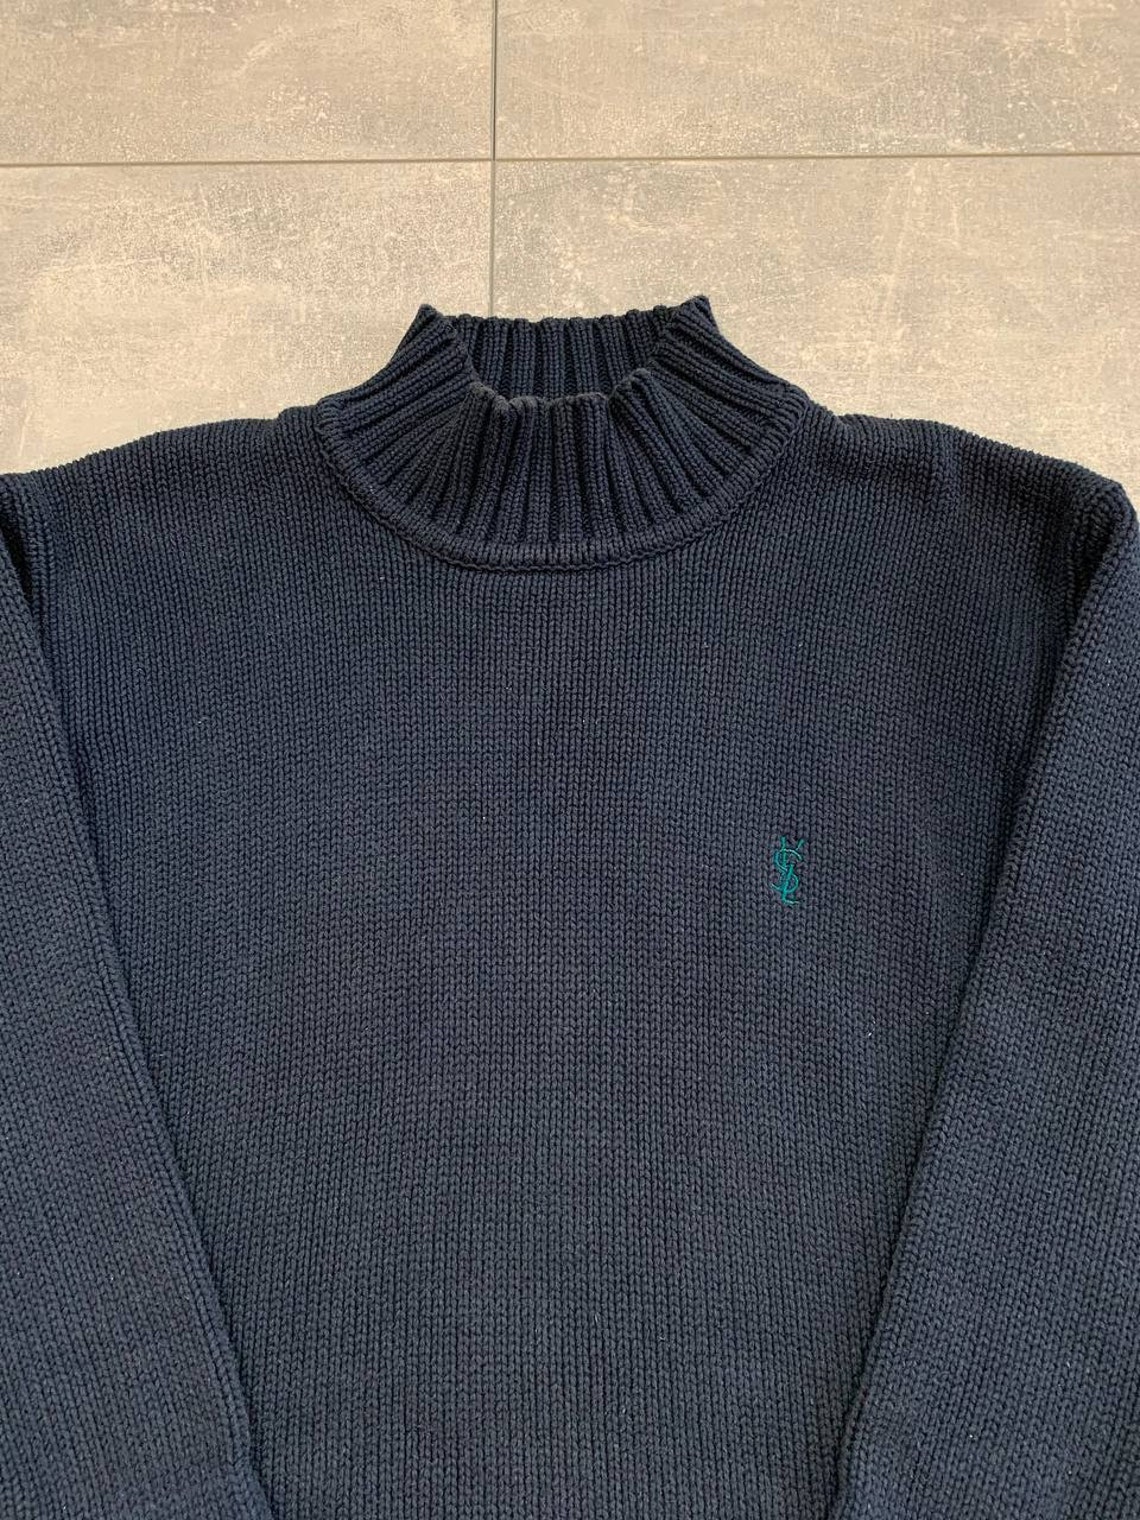 Yves saint Laurent ysl crewneck vintage sweater rare vntg | Etsy